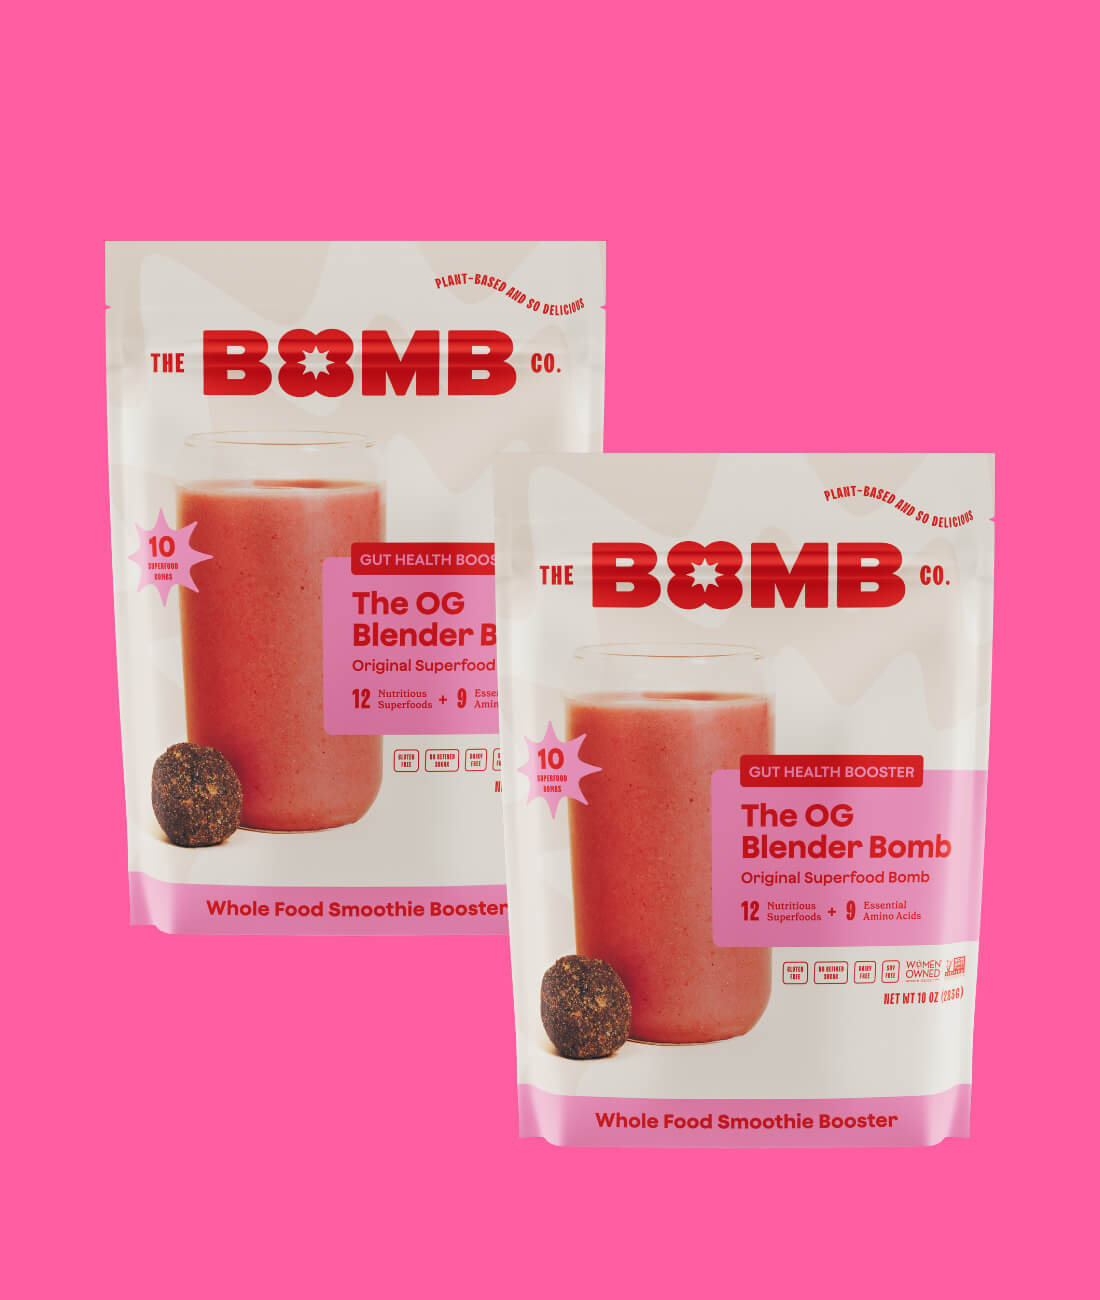 GNC Blender Bombs Smoothie Booster & Power Snack - Aloe Irish Sea